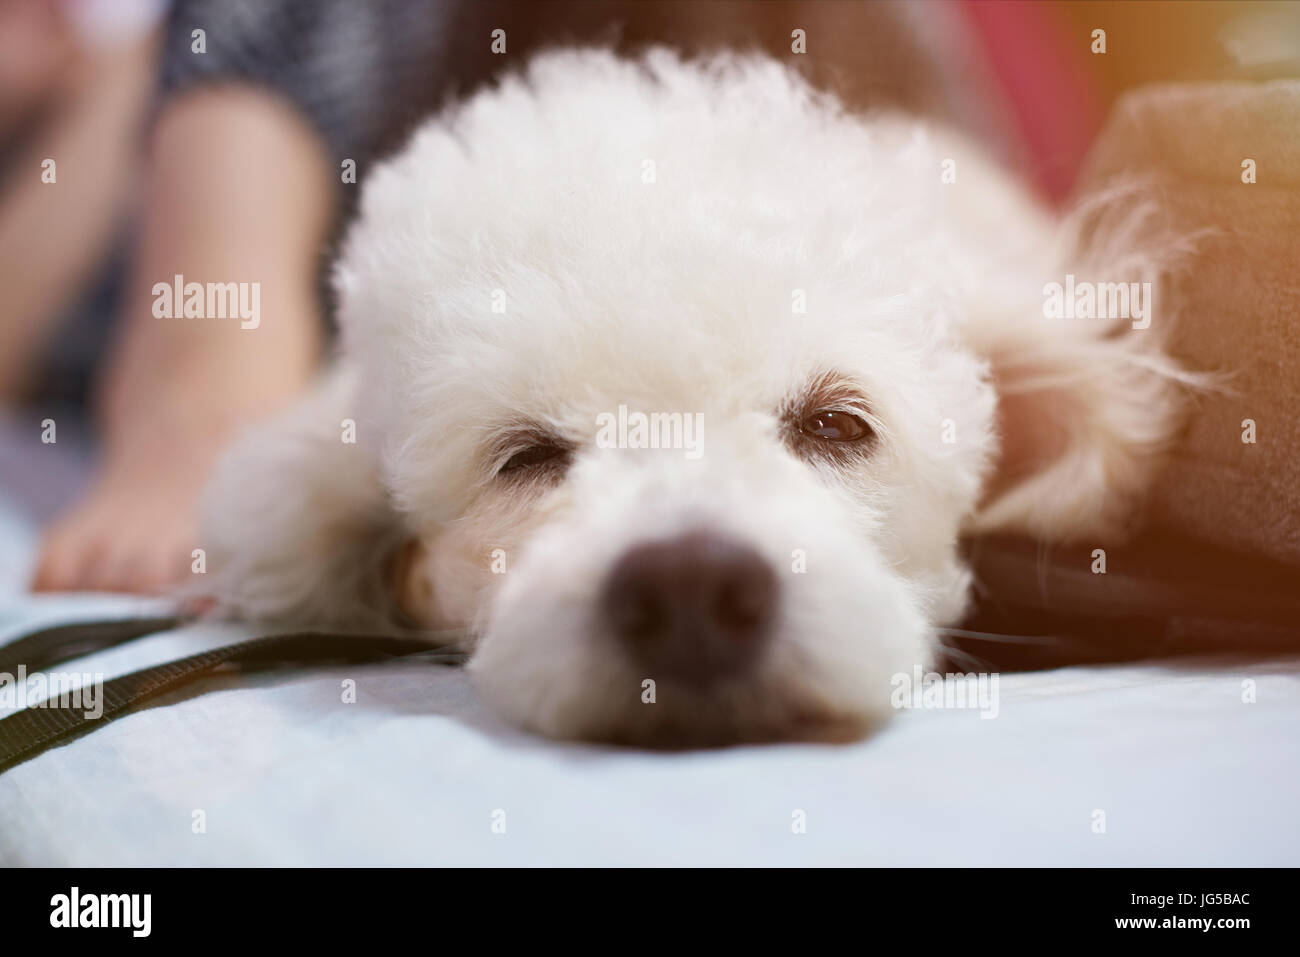 Half sleeping white poodle dog head close-up. Home pet cute dog Stock Photo